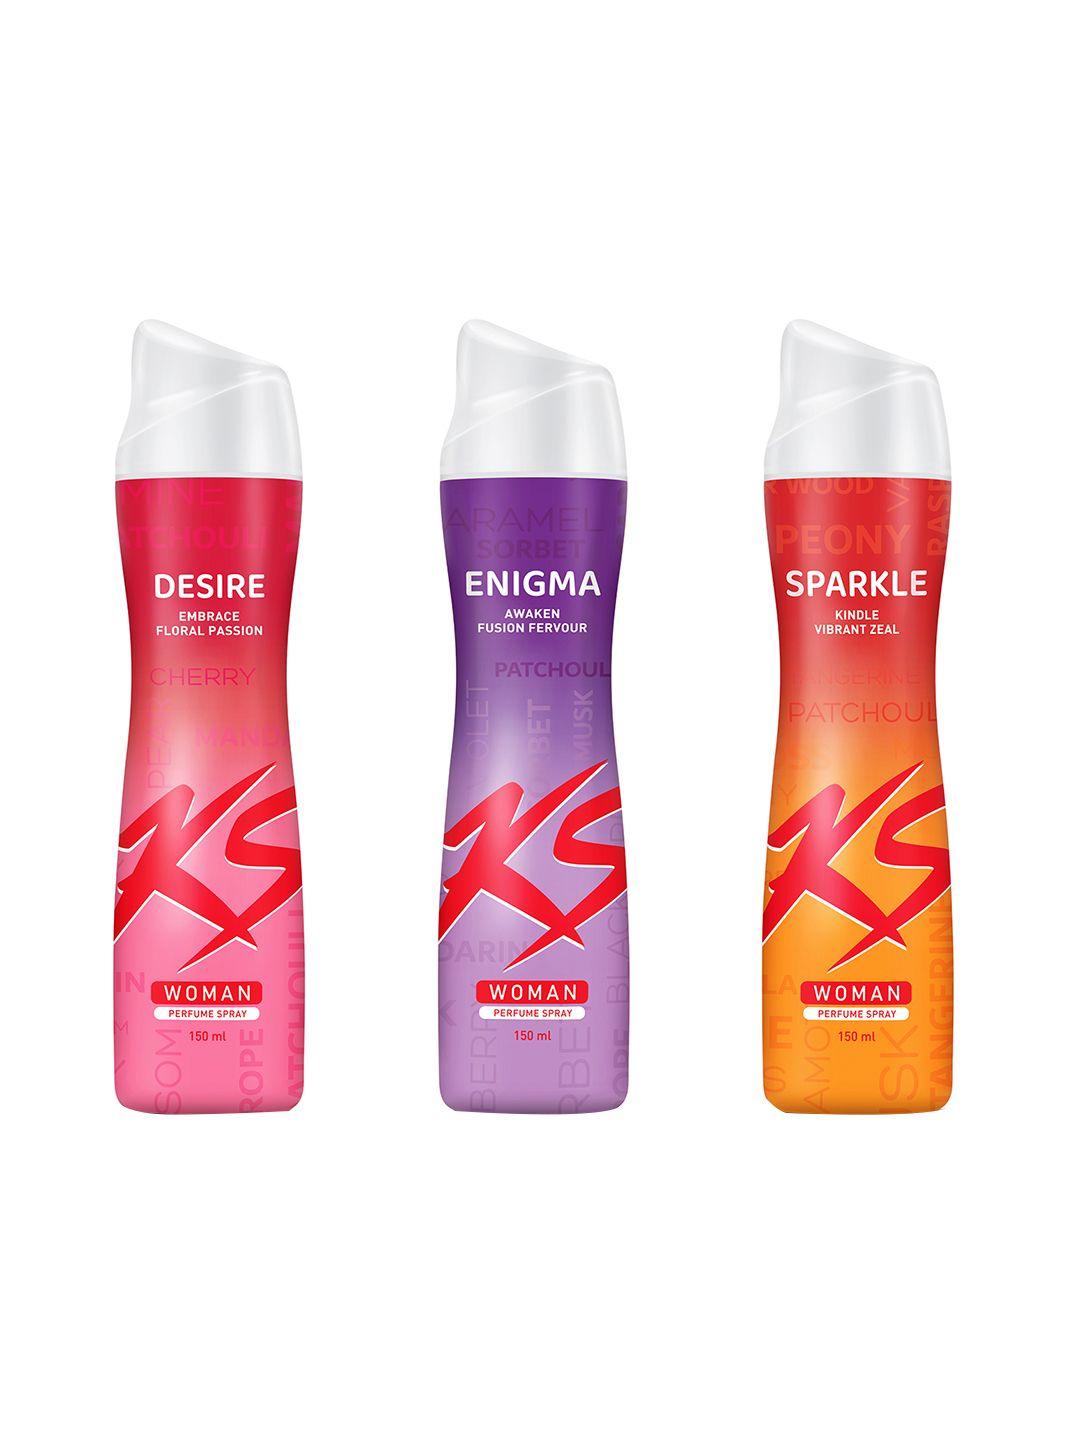 kamasutra women set of 3 deodorant spray - desire + enigma + sparkle - 150ml each